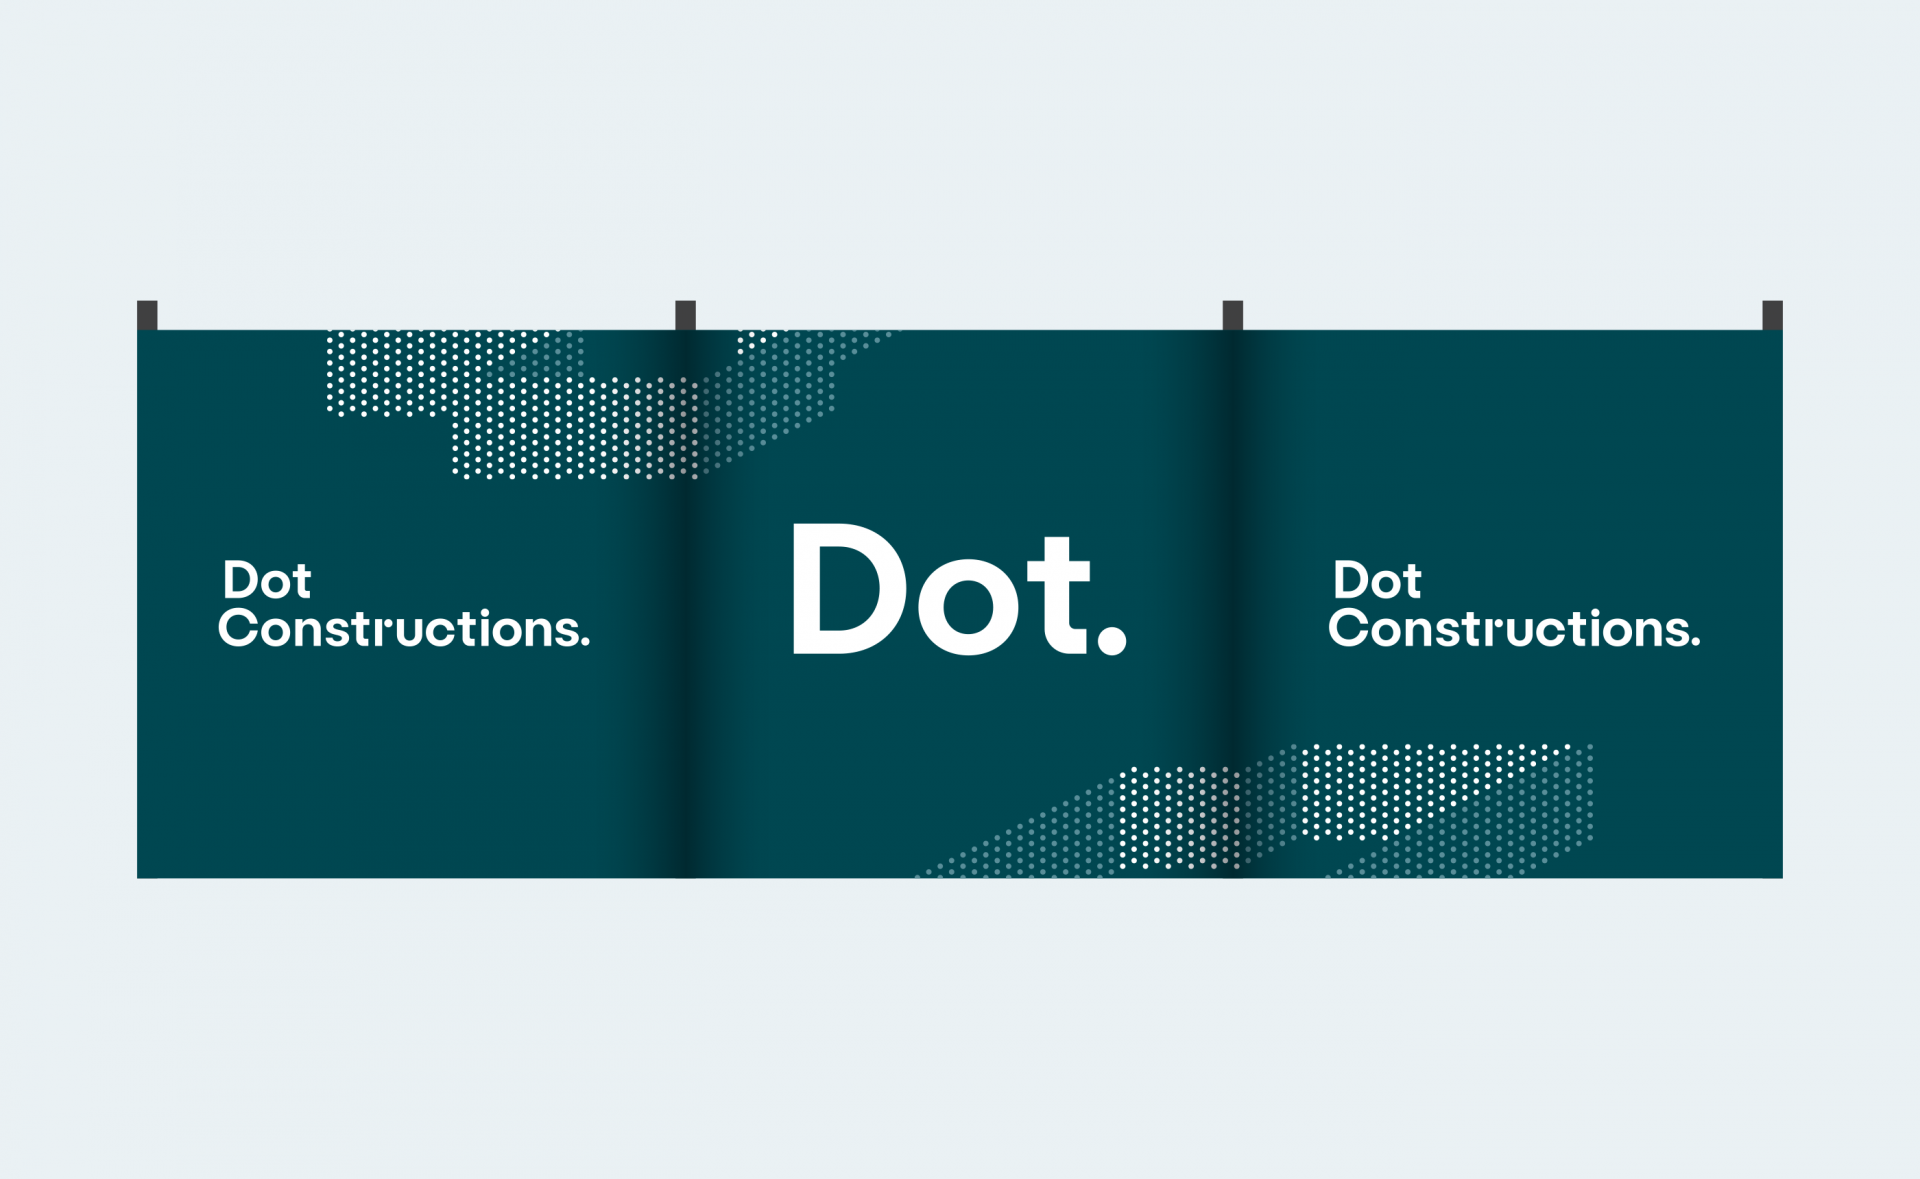 Dot Constructions